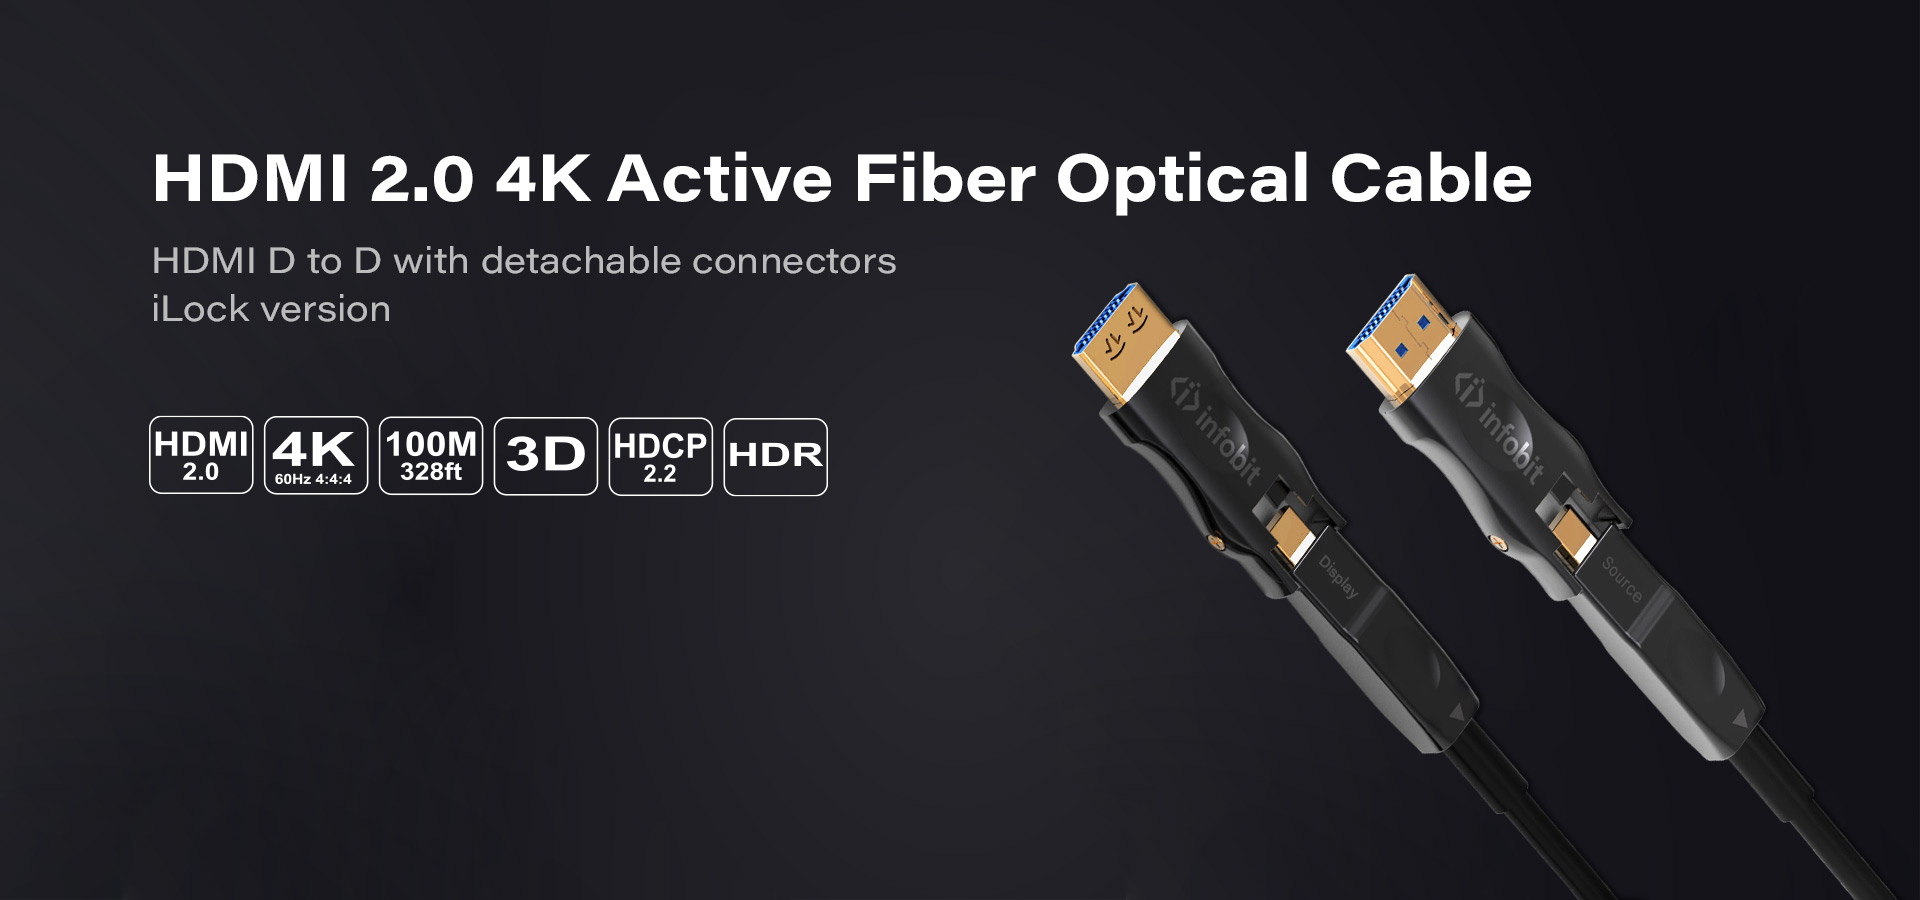 DD: HDMI D to D detachable connectors with iLock